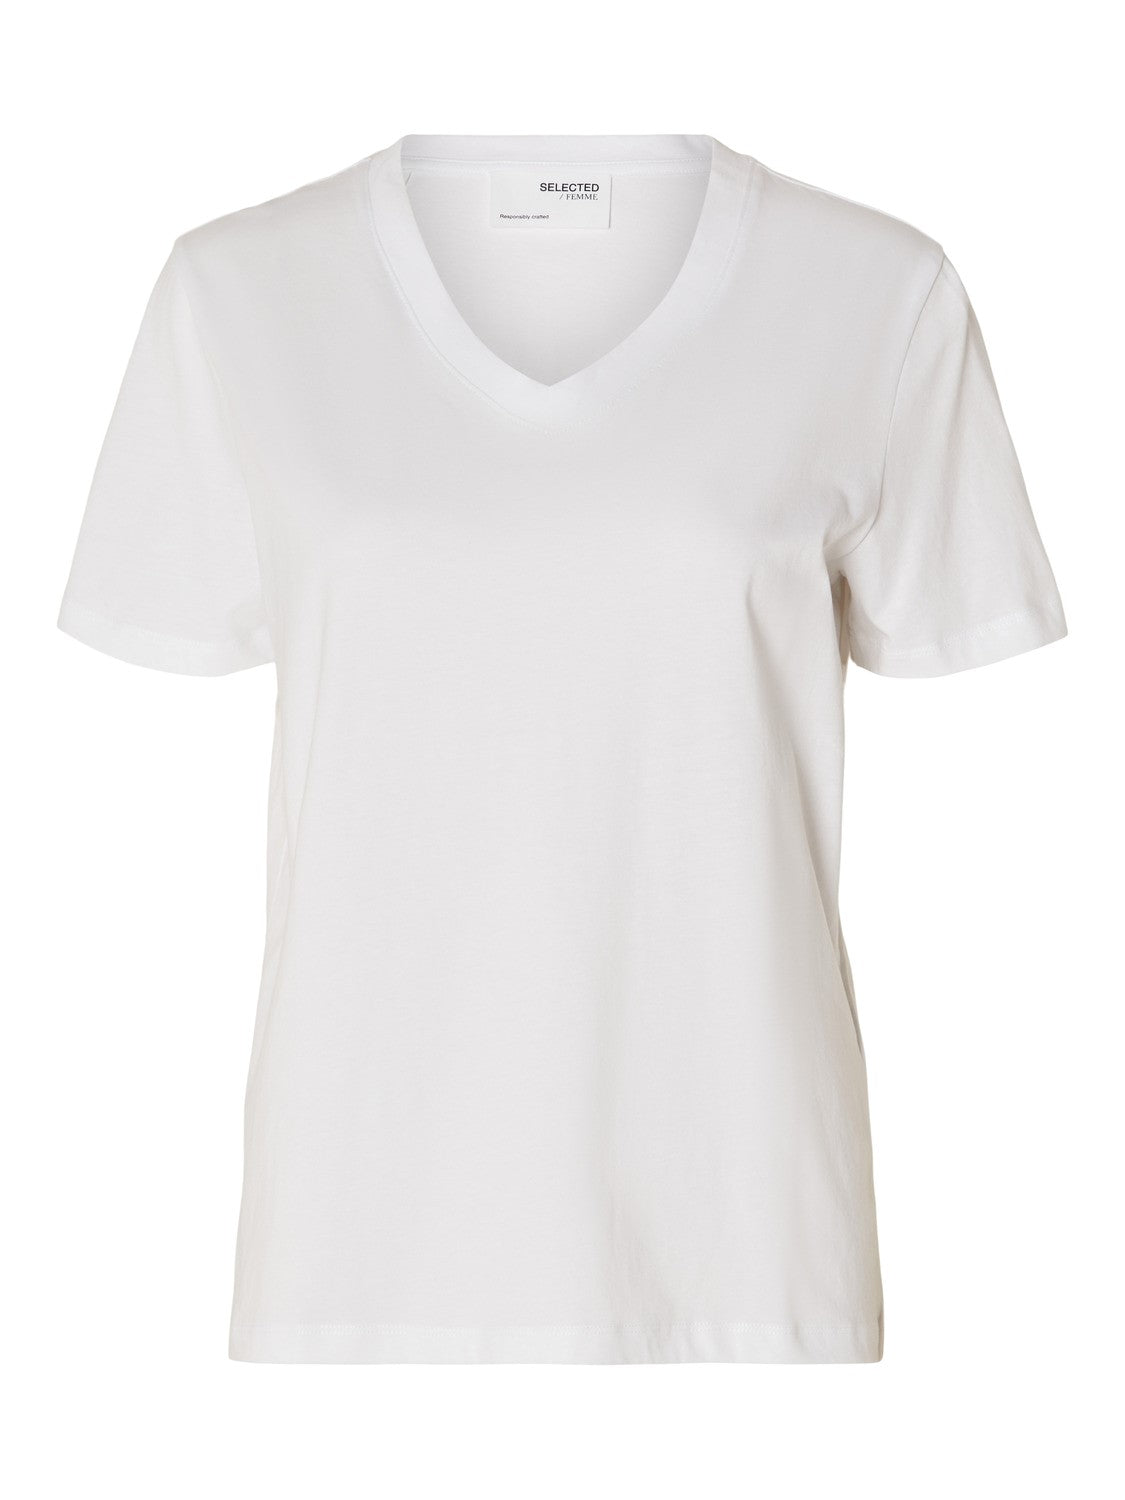 T-shirt Essential v-neck, bright white